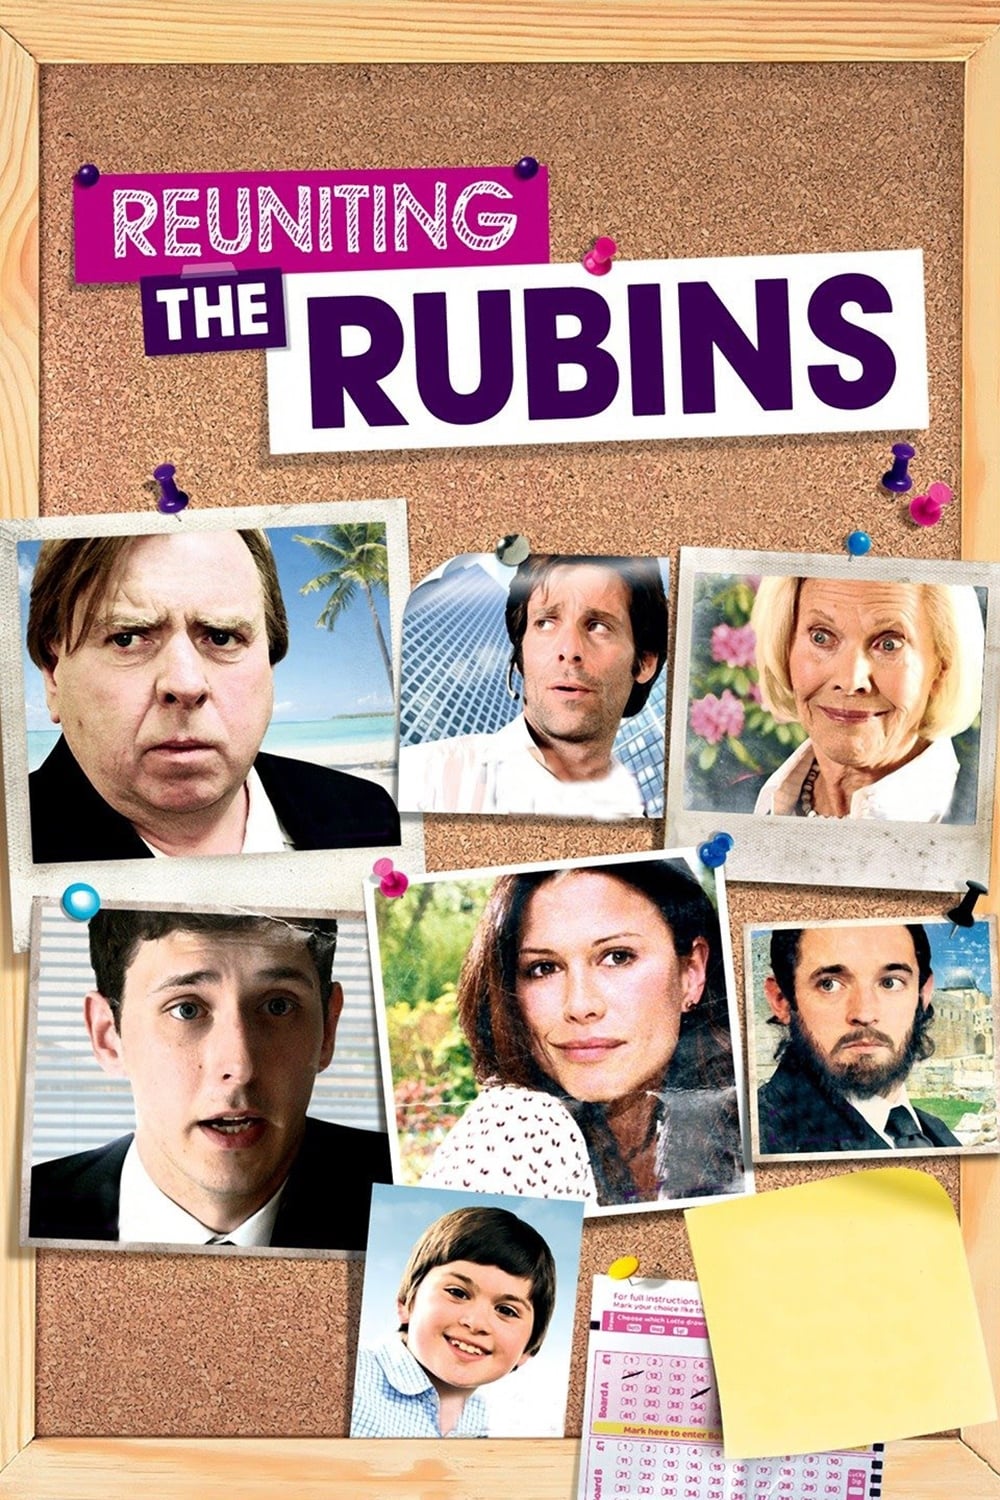 Reuniting the Rubins (2011)